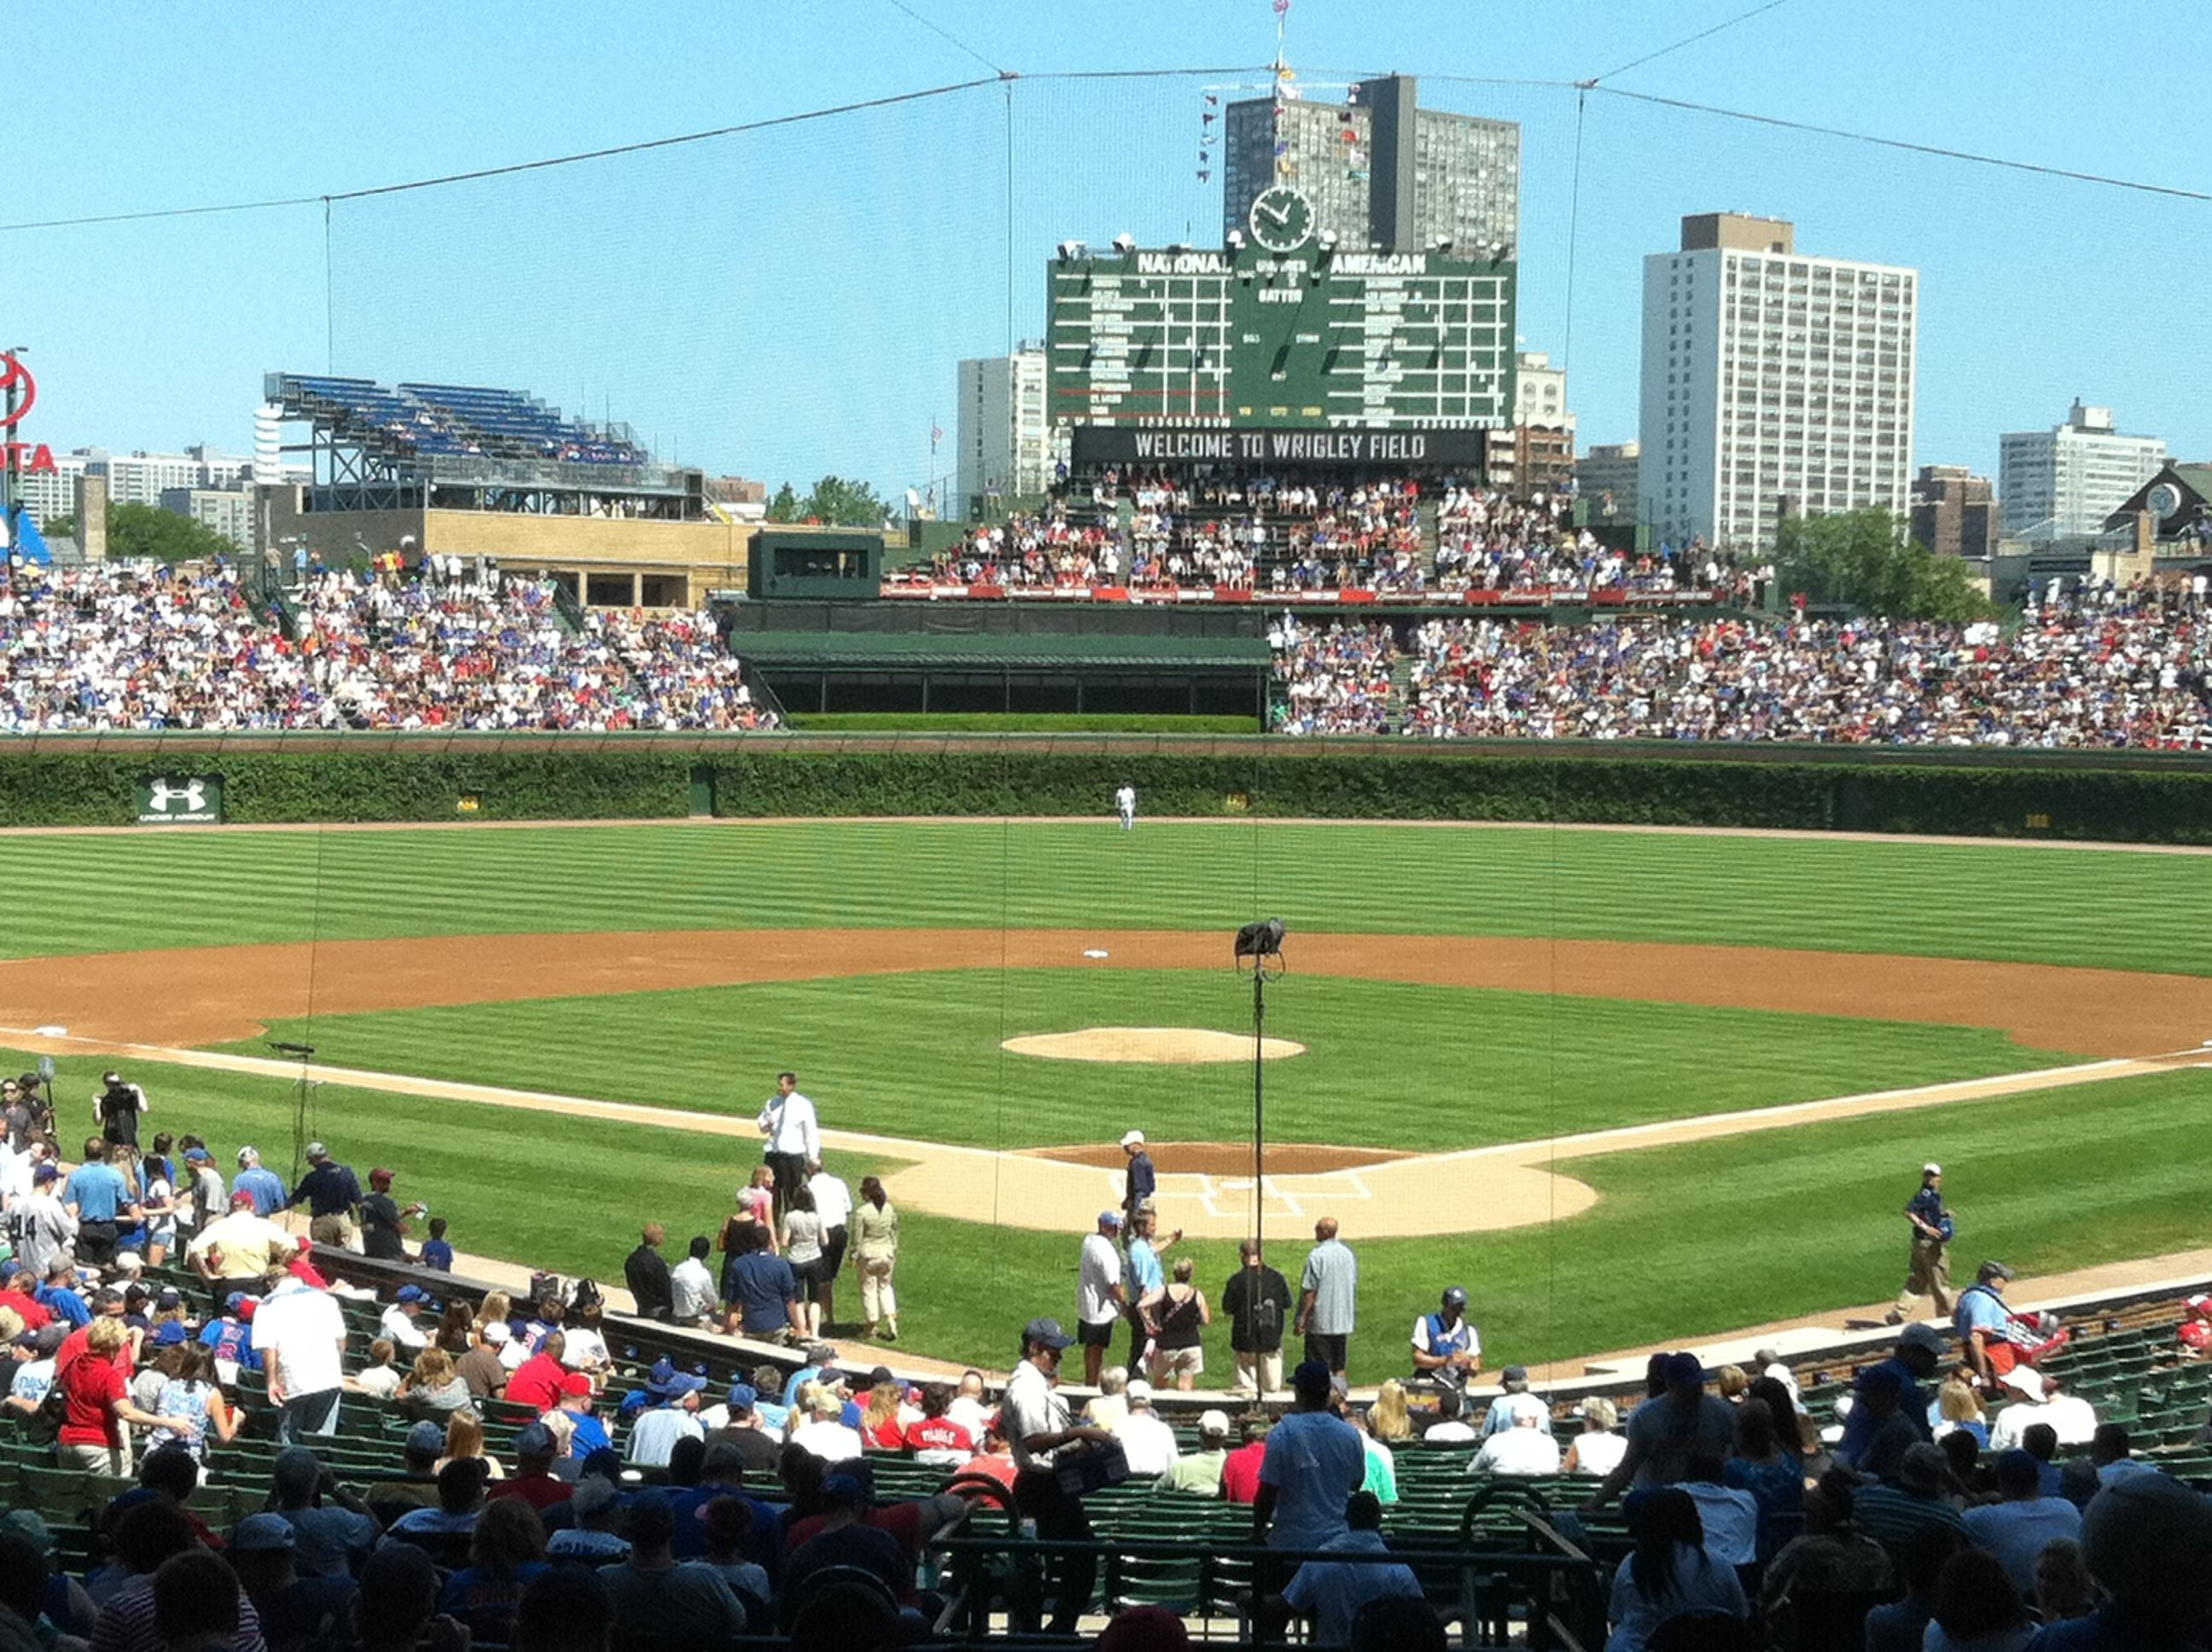 2592x1936 Wrigley Field Chicago Cubs done | Wrigley field chicago, Wrigley field, Wrigley